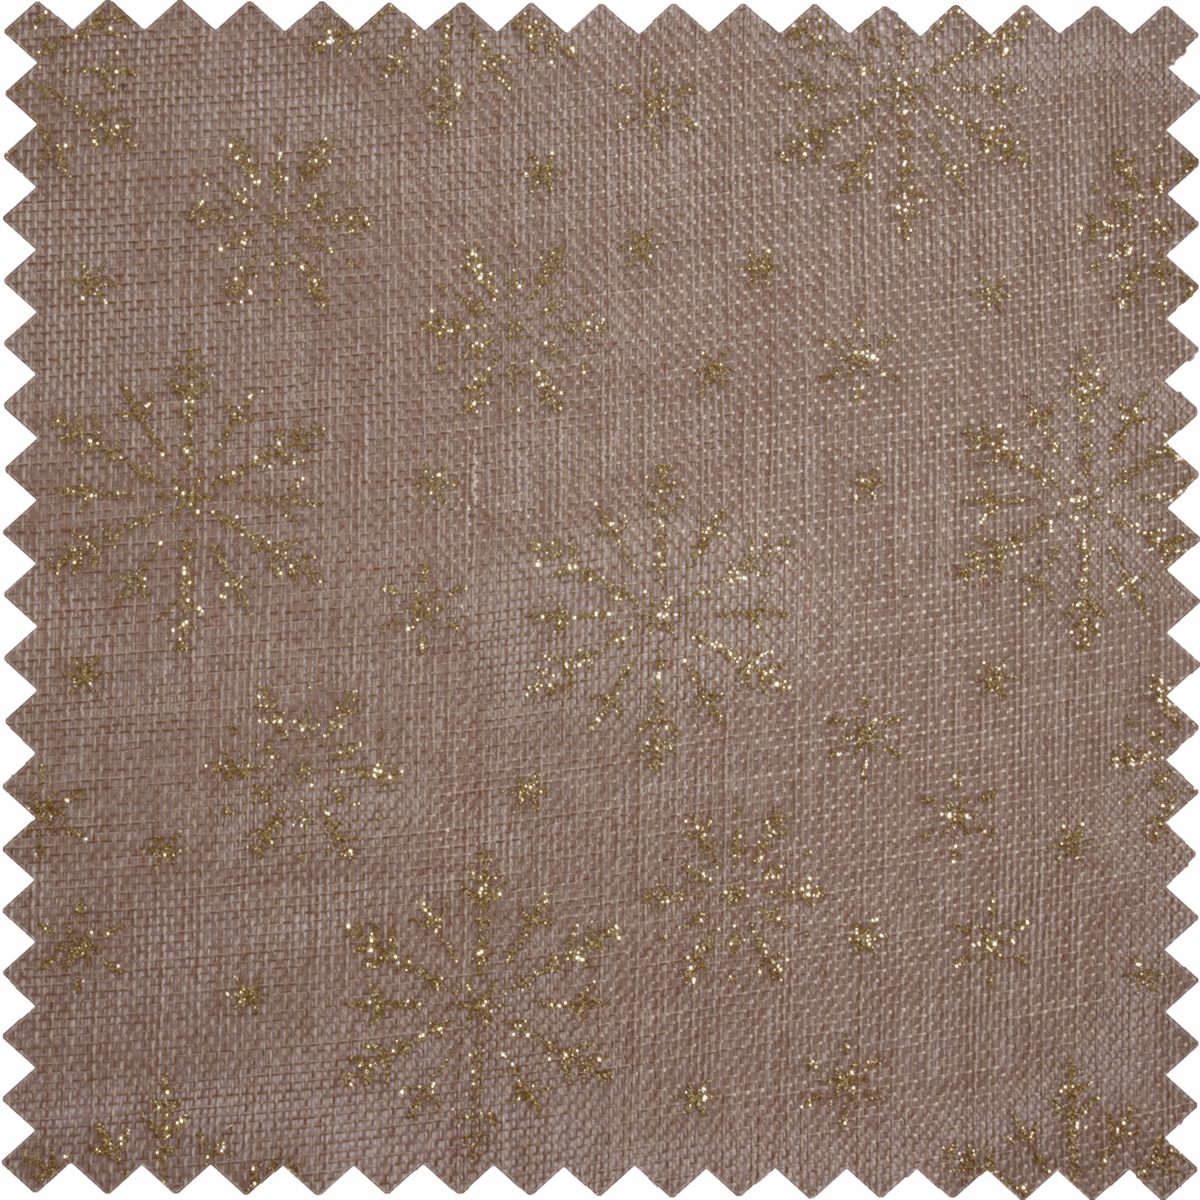 Fabric Roll: 2m x 40cm - Glitter Snowflake